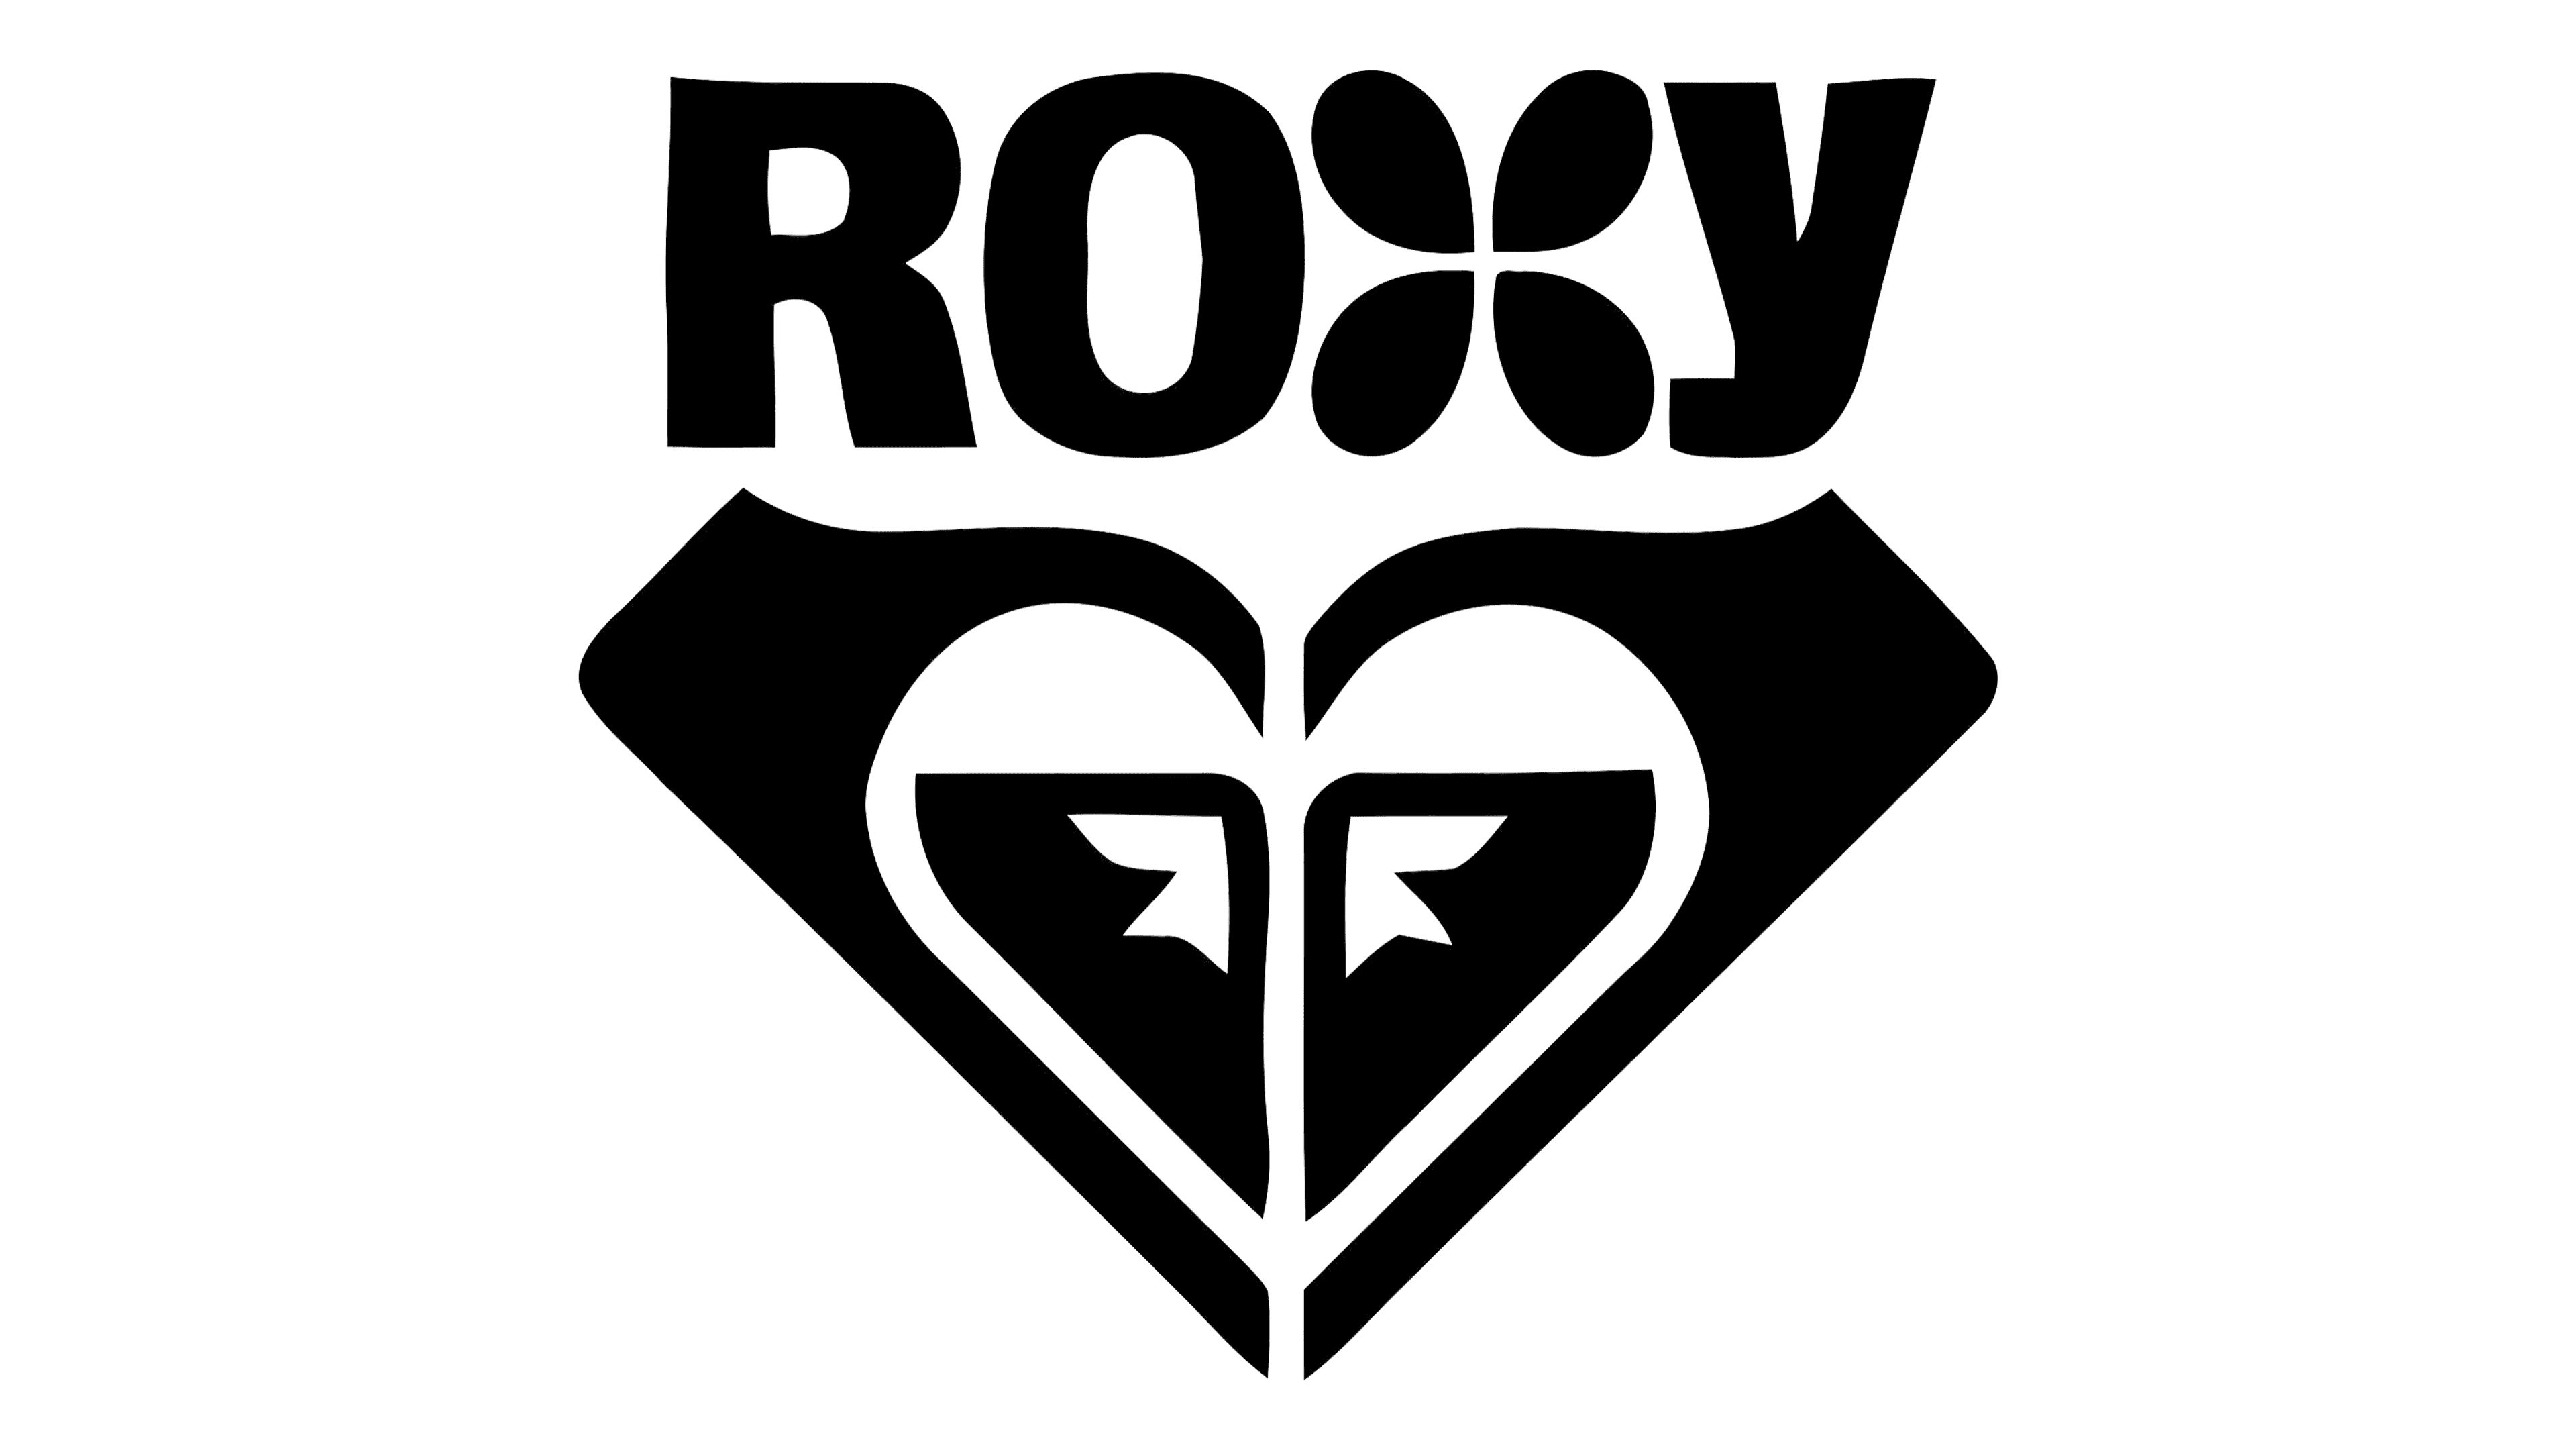 Details more than 143 roxy logo best - highschoolcanada.edu.vn